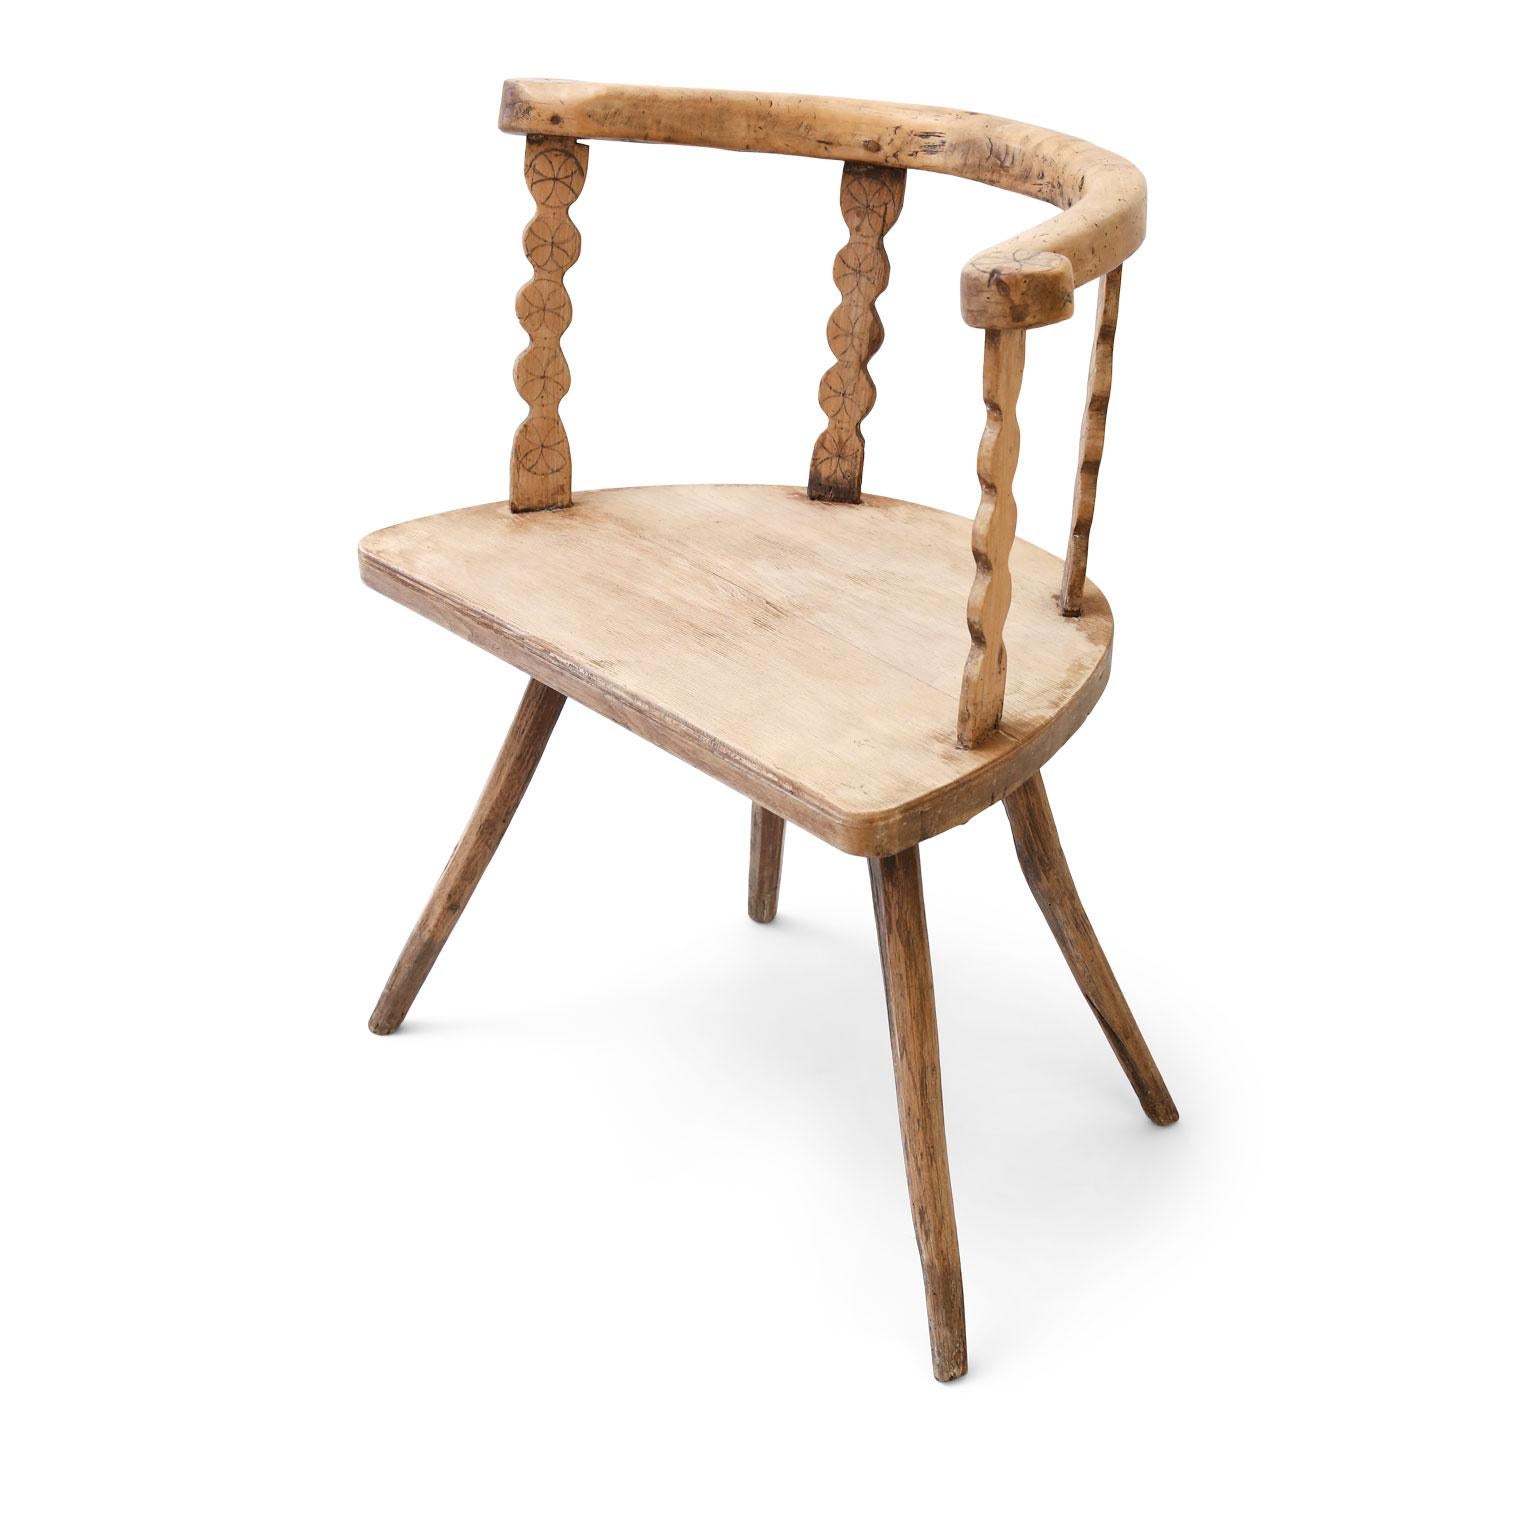 19th Century Swedish Vernacular Chair